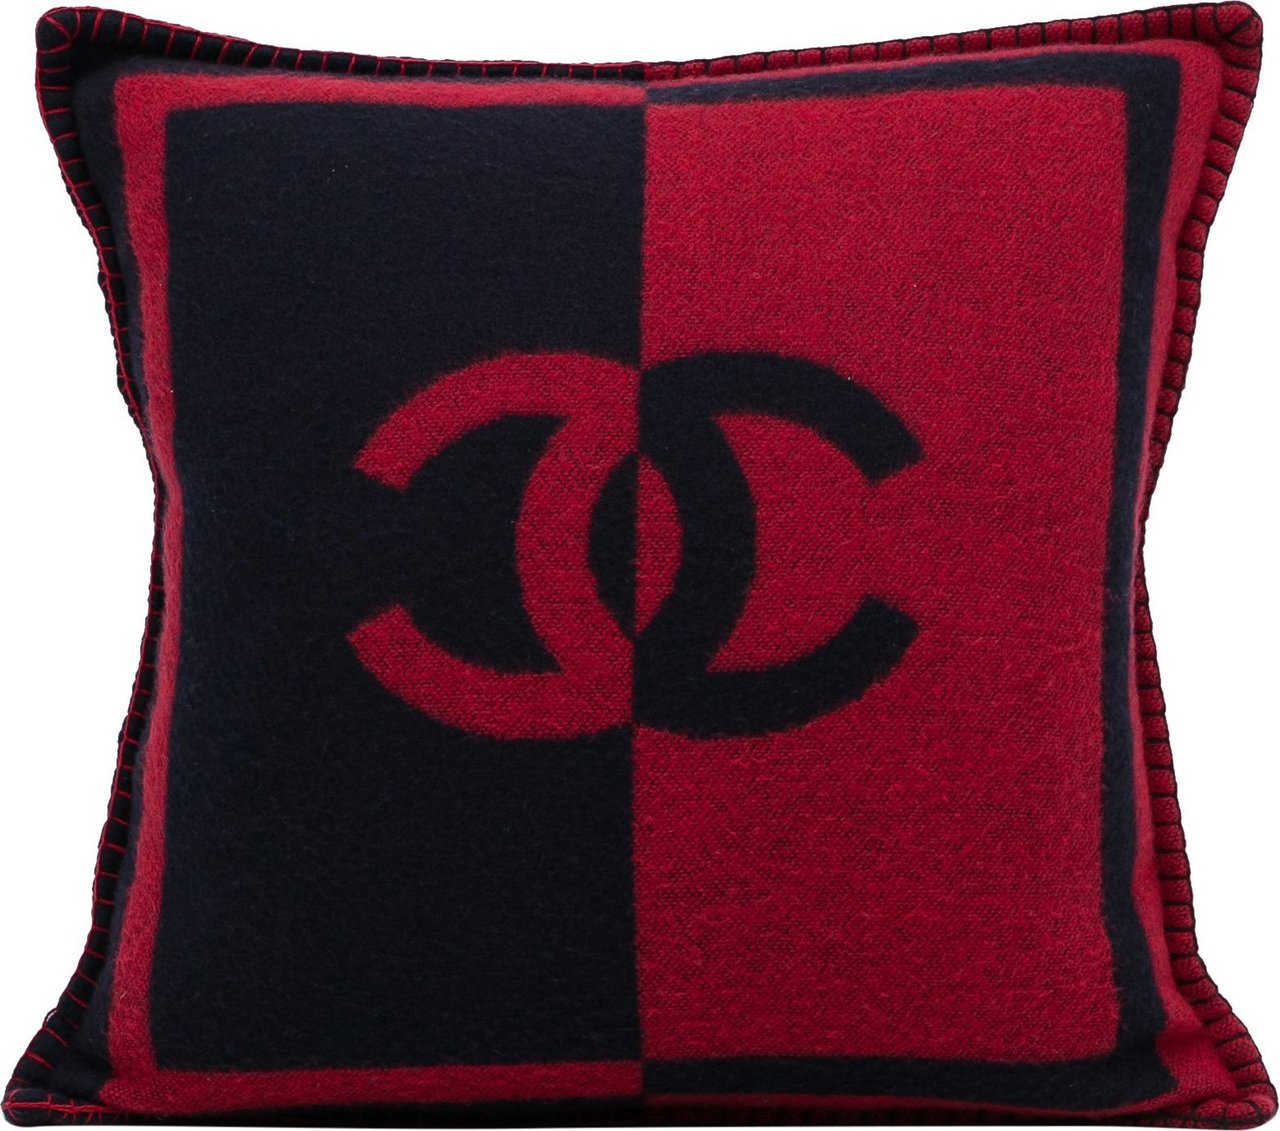 Chanel CC Throw Pillow - Black Pillows, Pillows & Throws